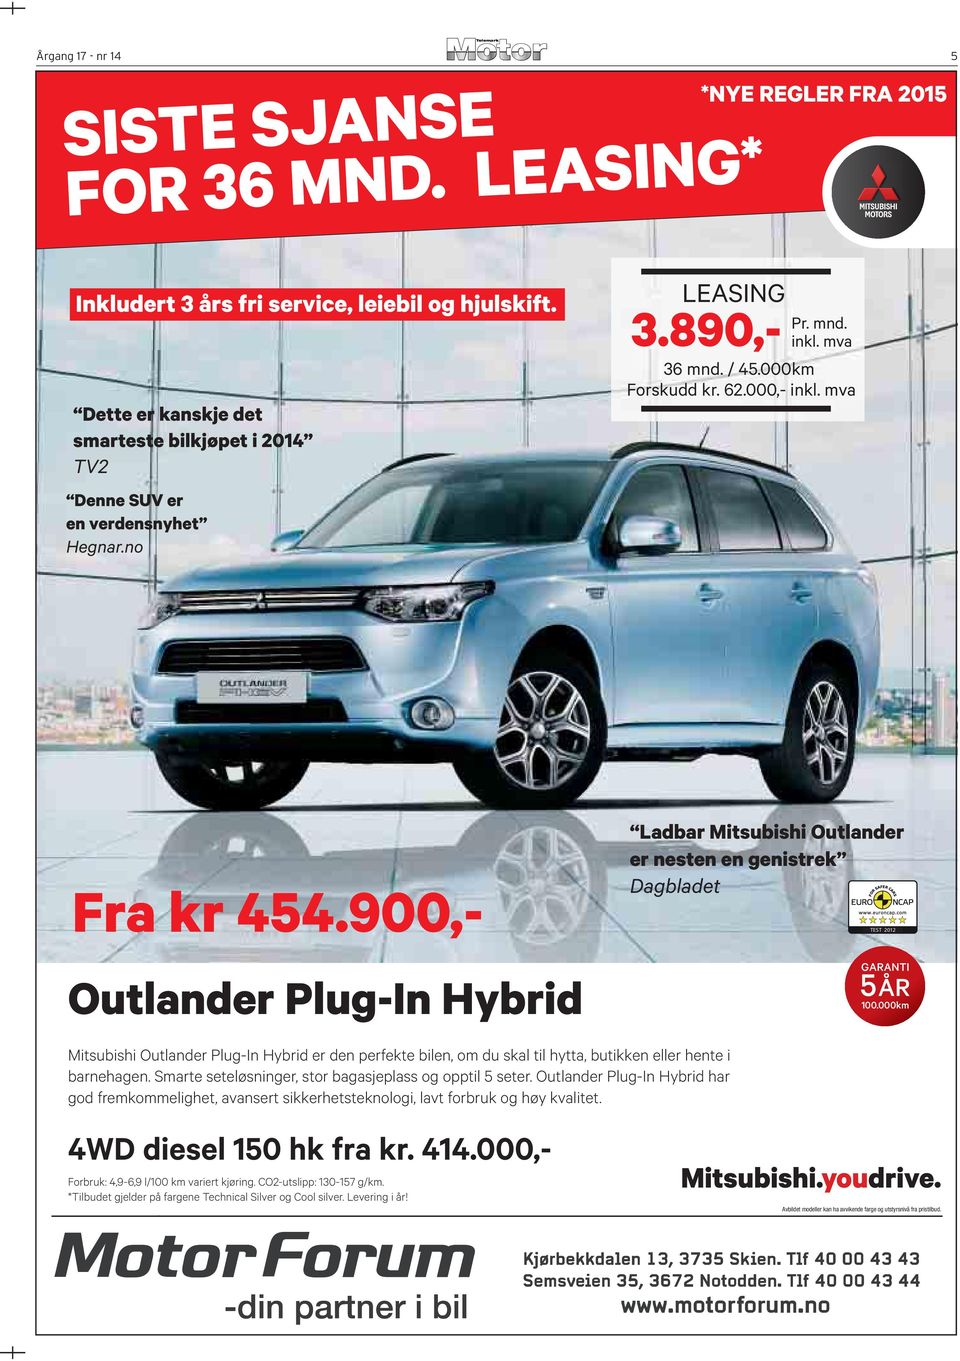 mva Ladbar Mitsubishi Outlander er nesten en genistrek Dagbladet TEST 2009 2012 Outlander Plug-In Hybrid GARANTI 5ÅR 100.